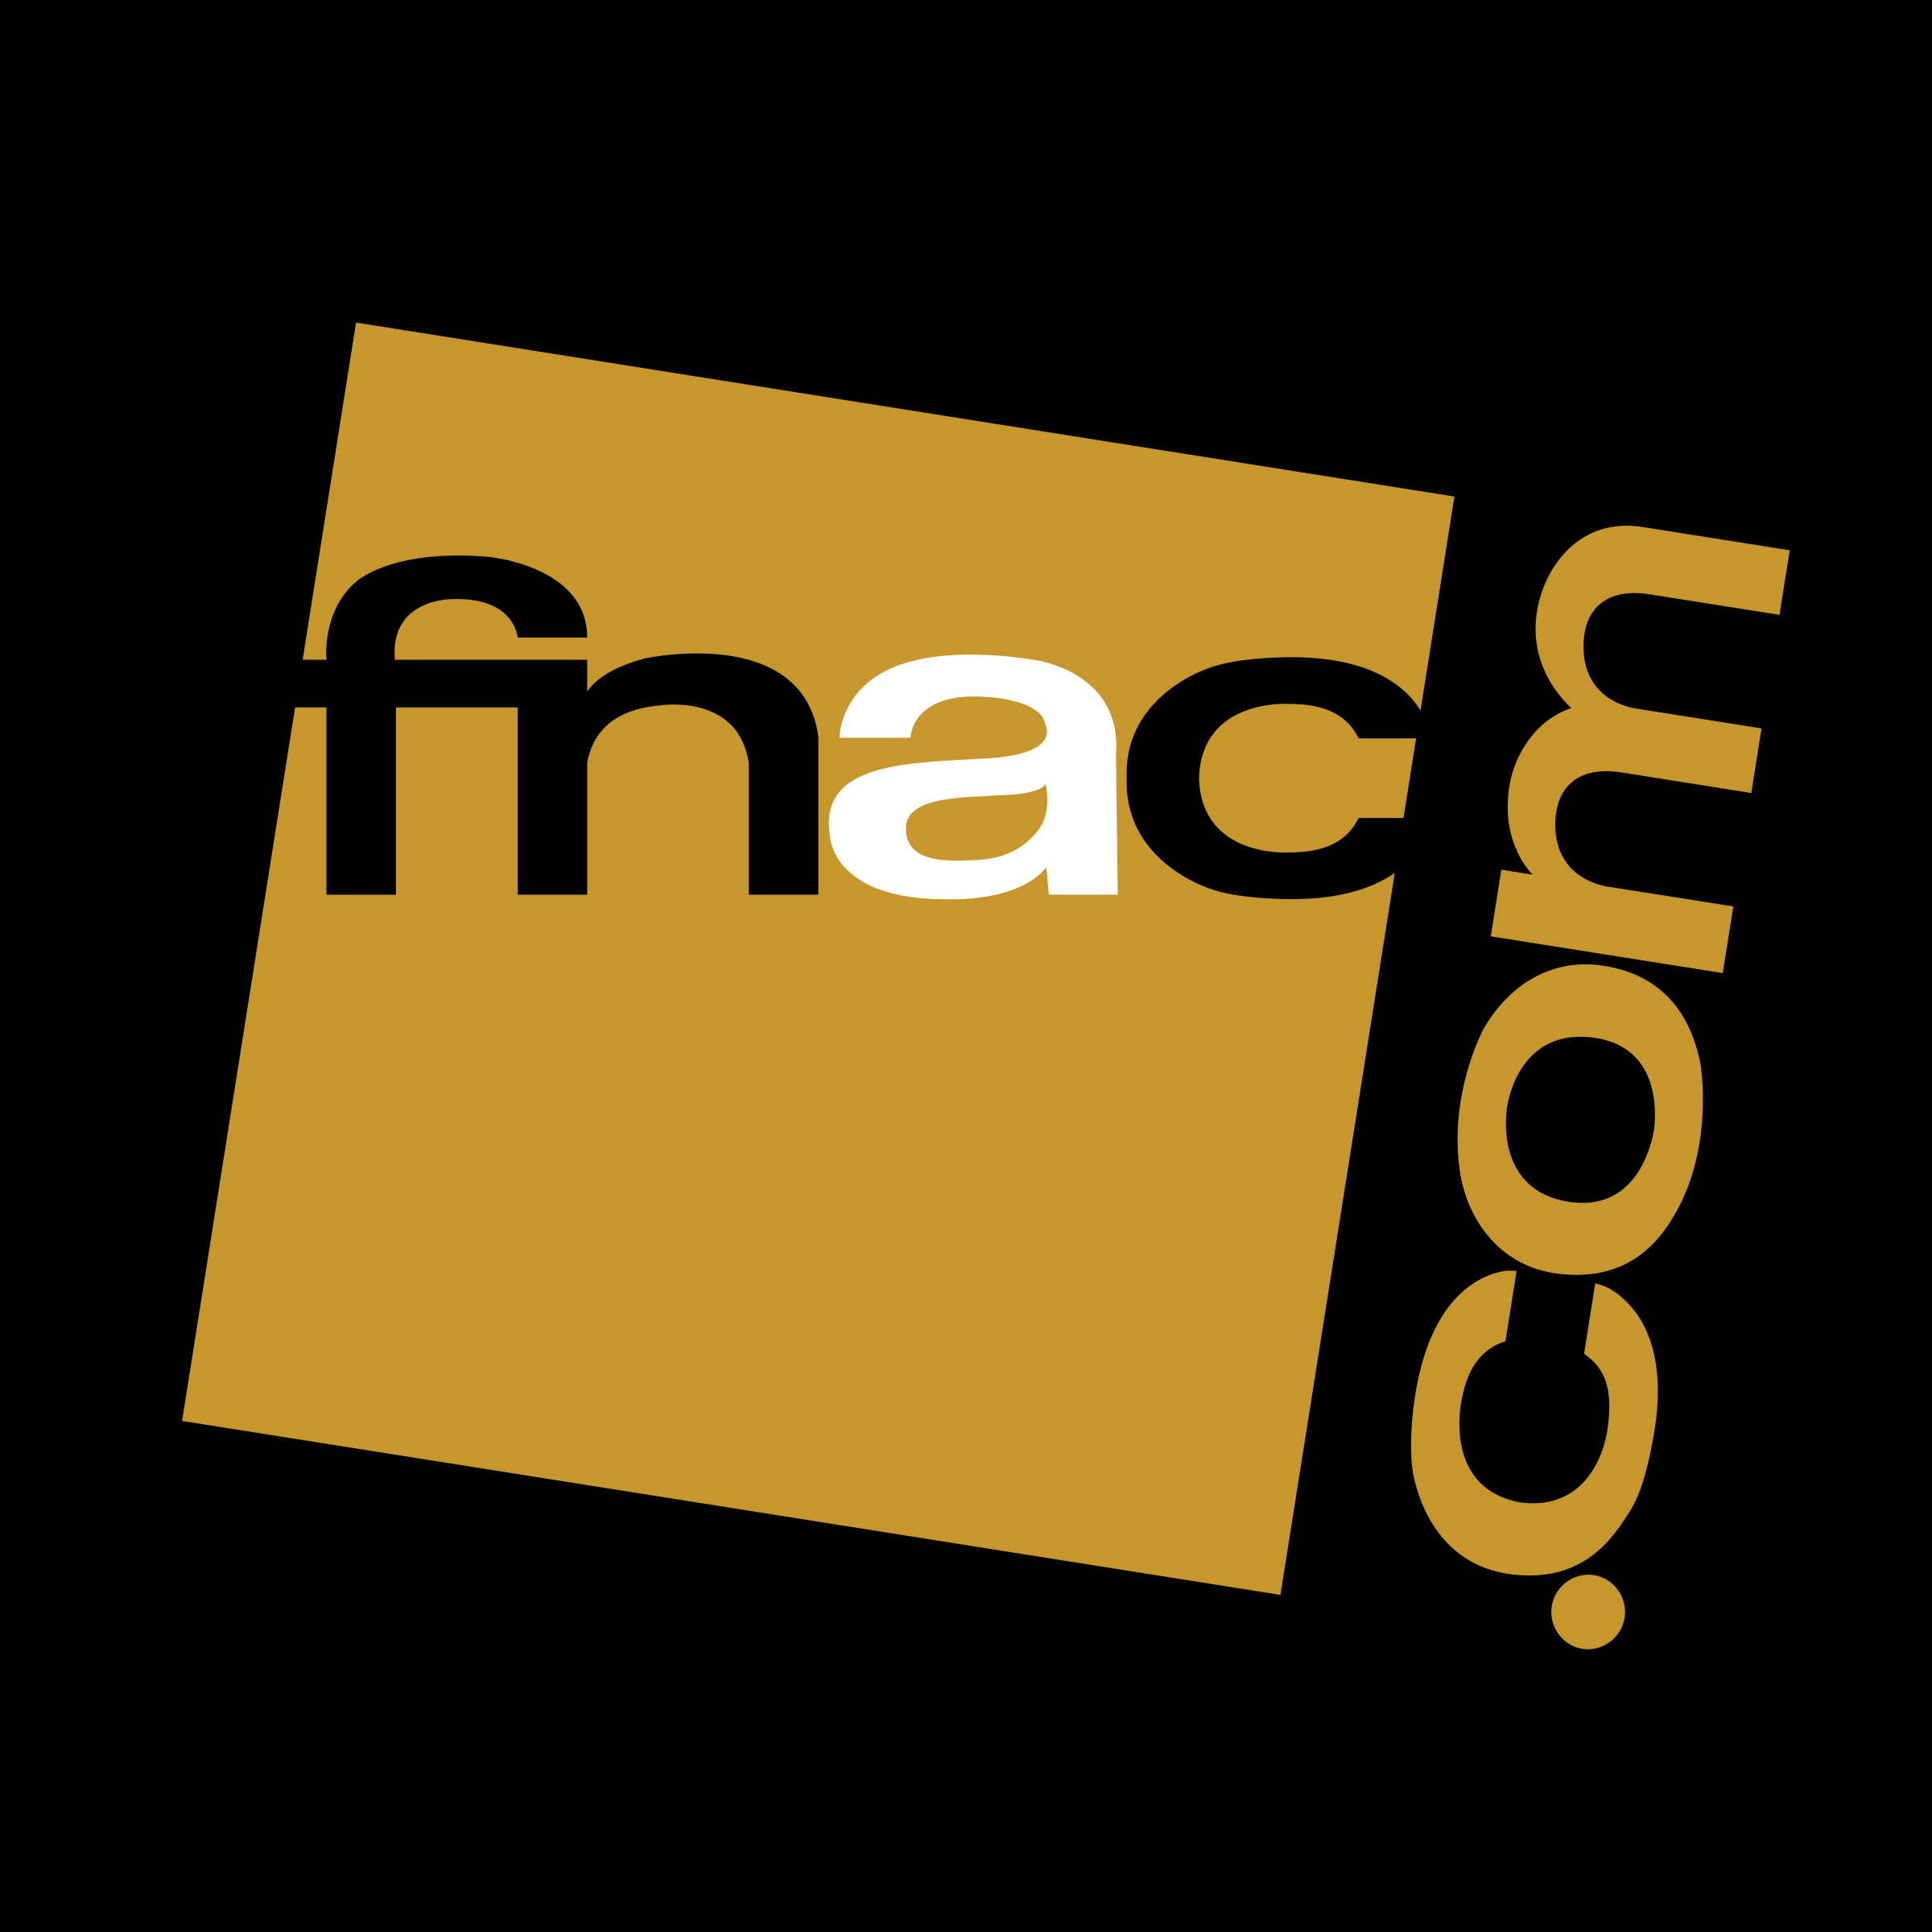 Fnac Logo - Fnac com Logo PNG Transparent & SVG Vector - Freebie Supply